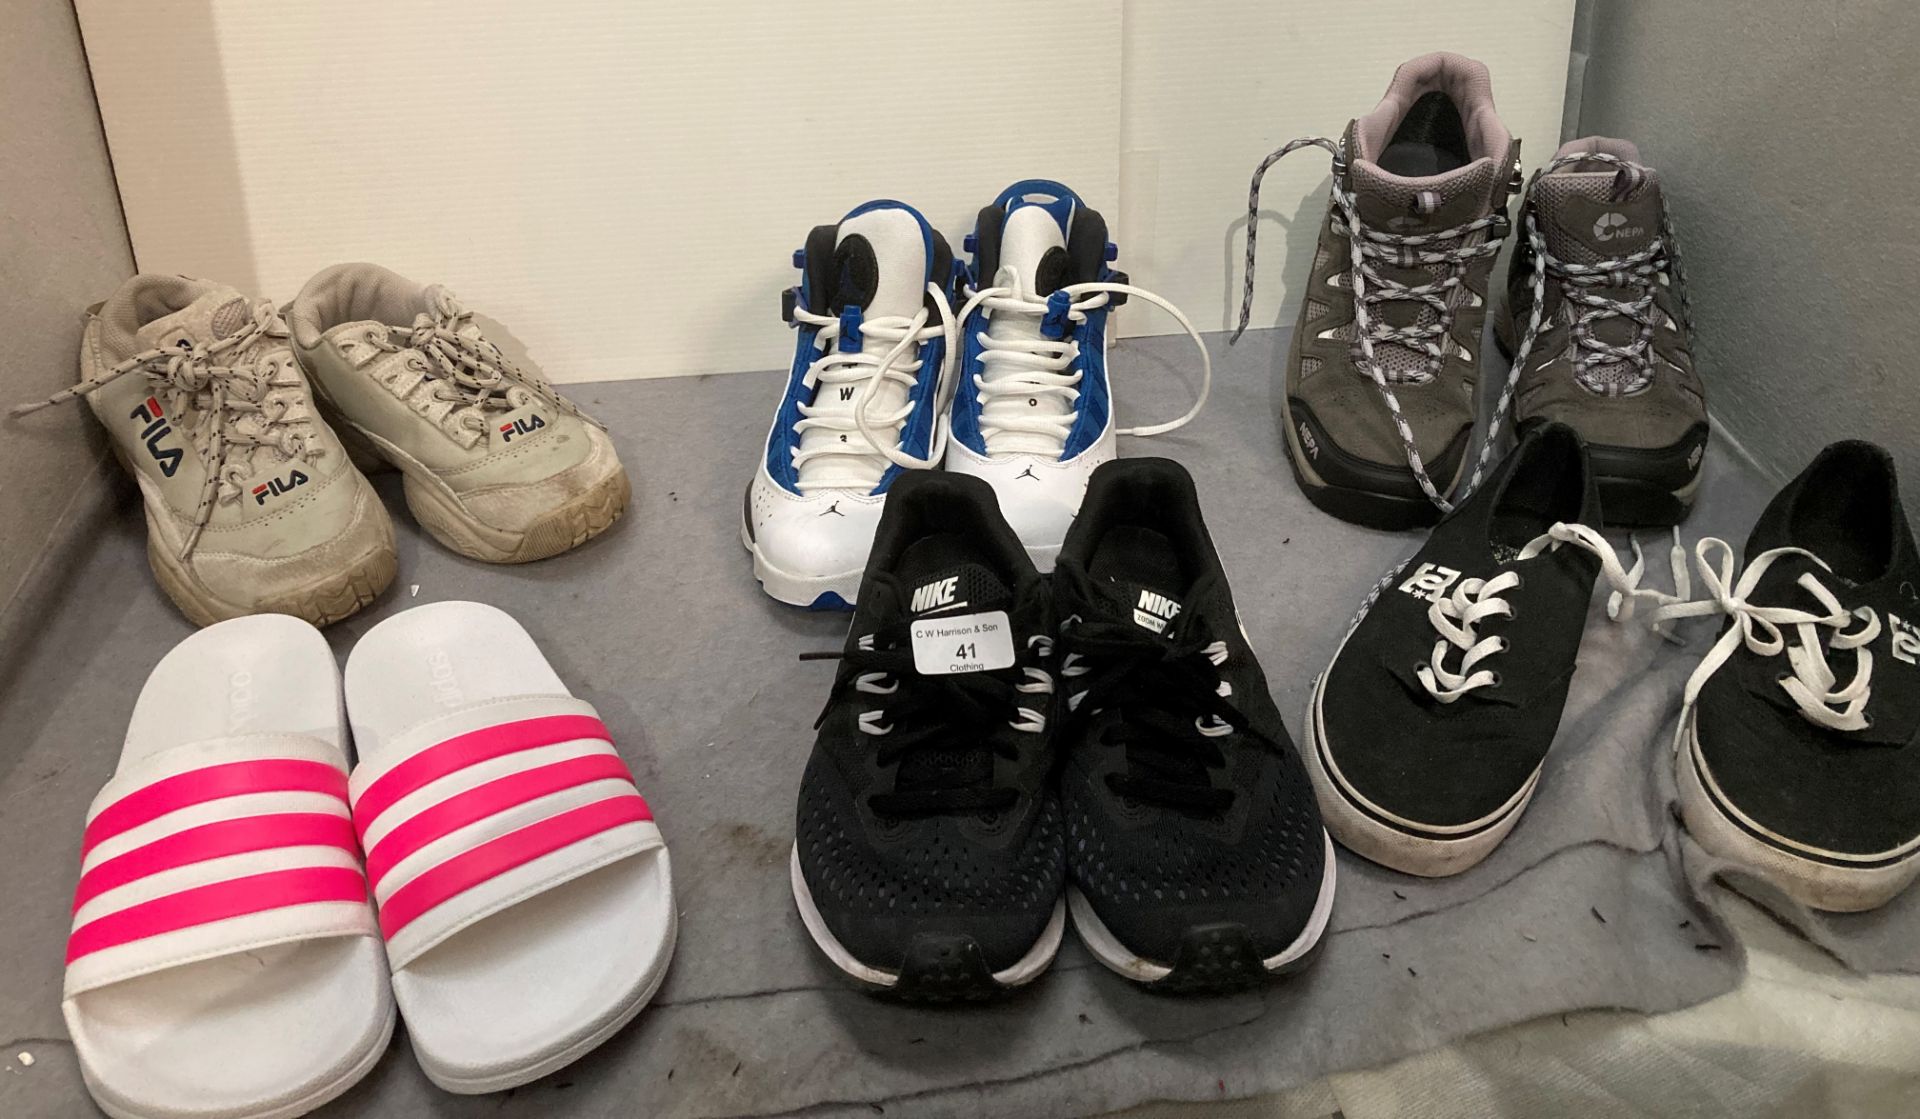 Six items assorted worn trainers, walking boots, flip flops by Fila, Nike,